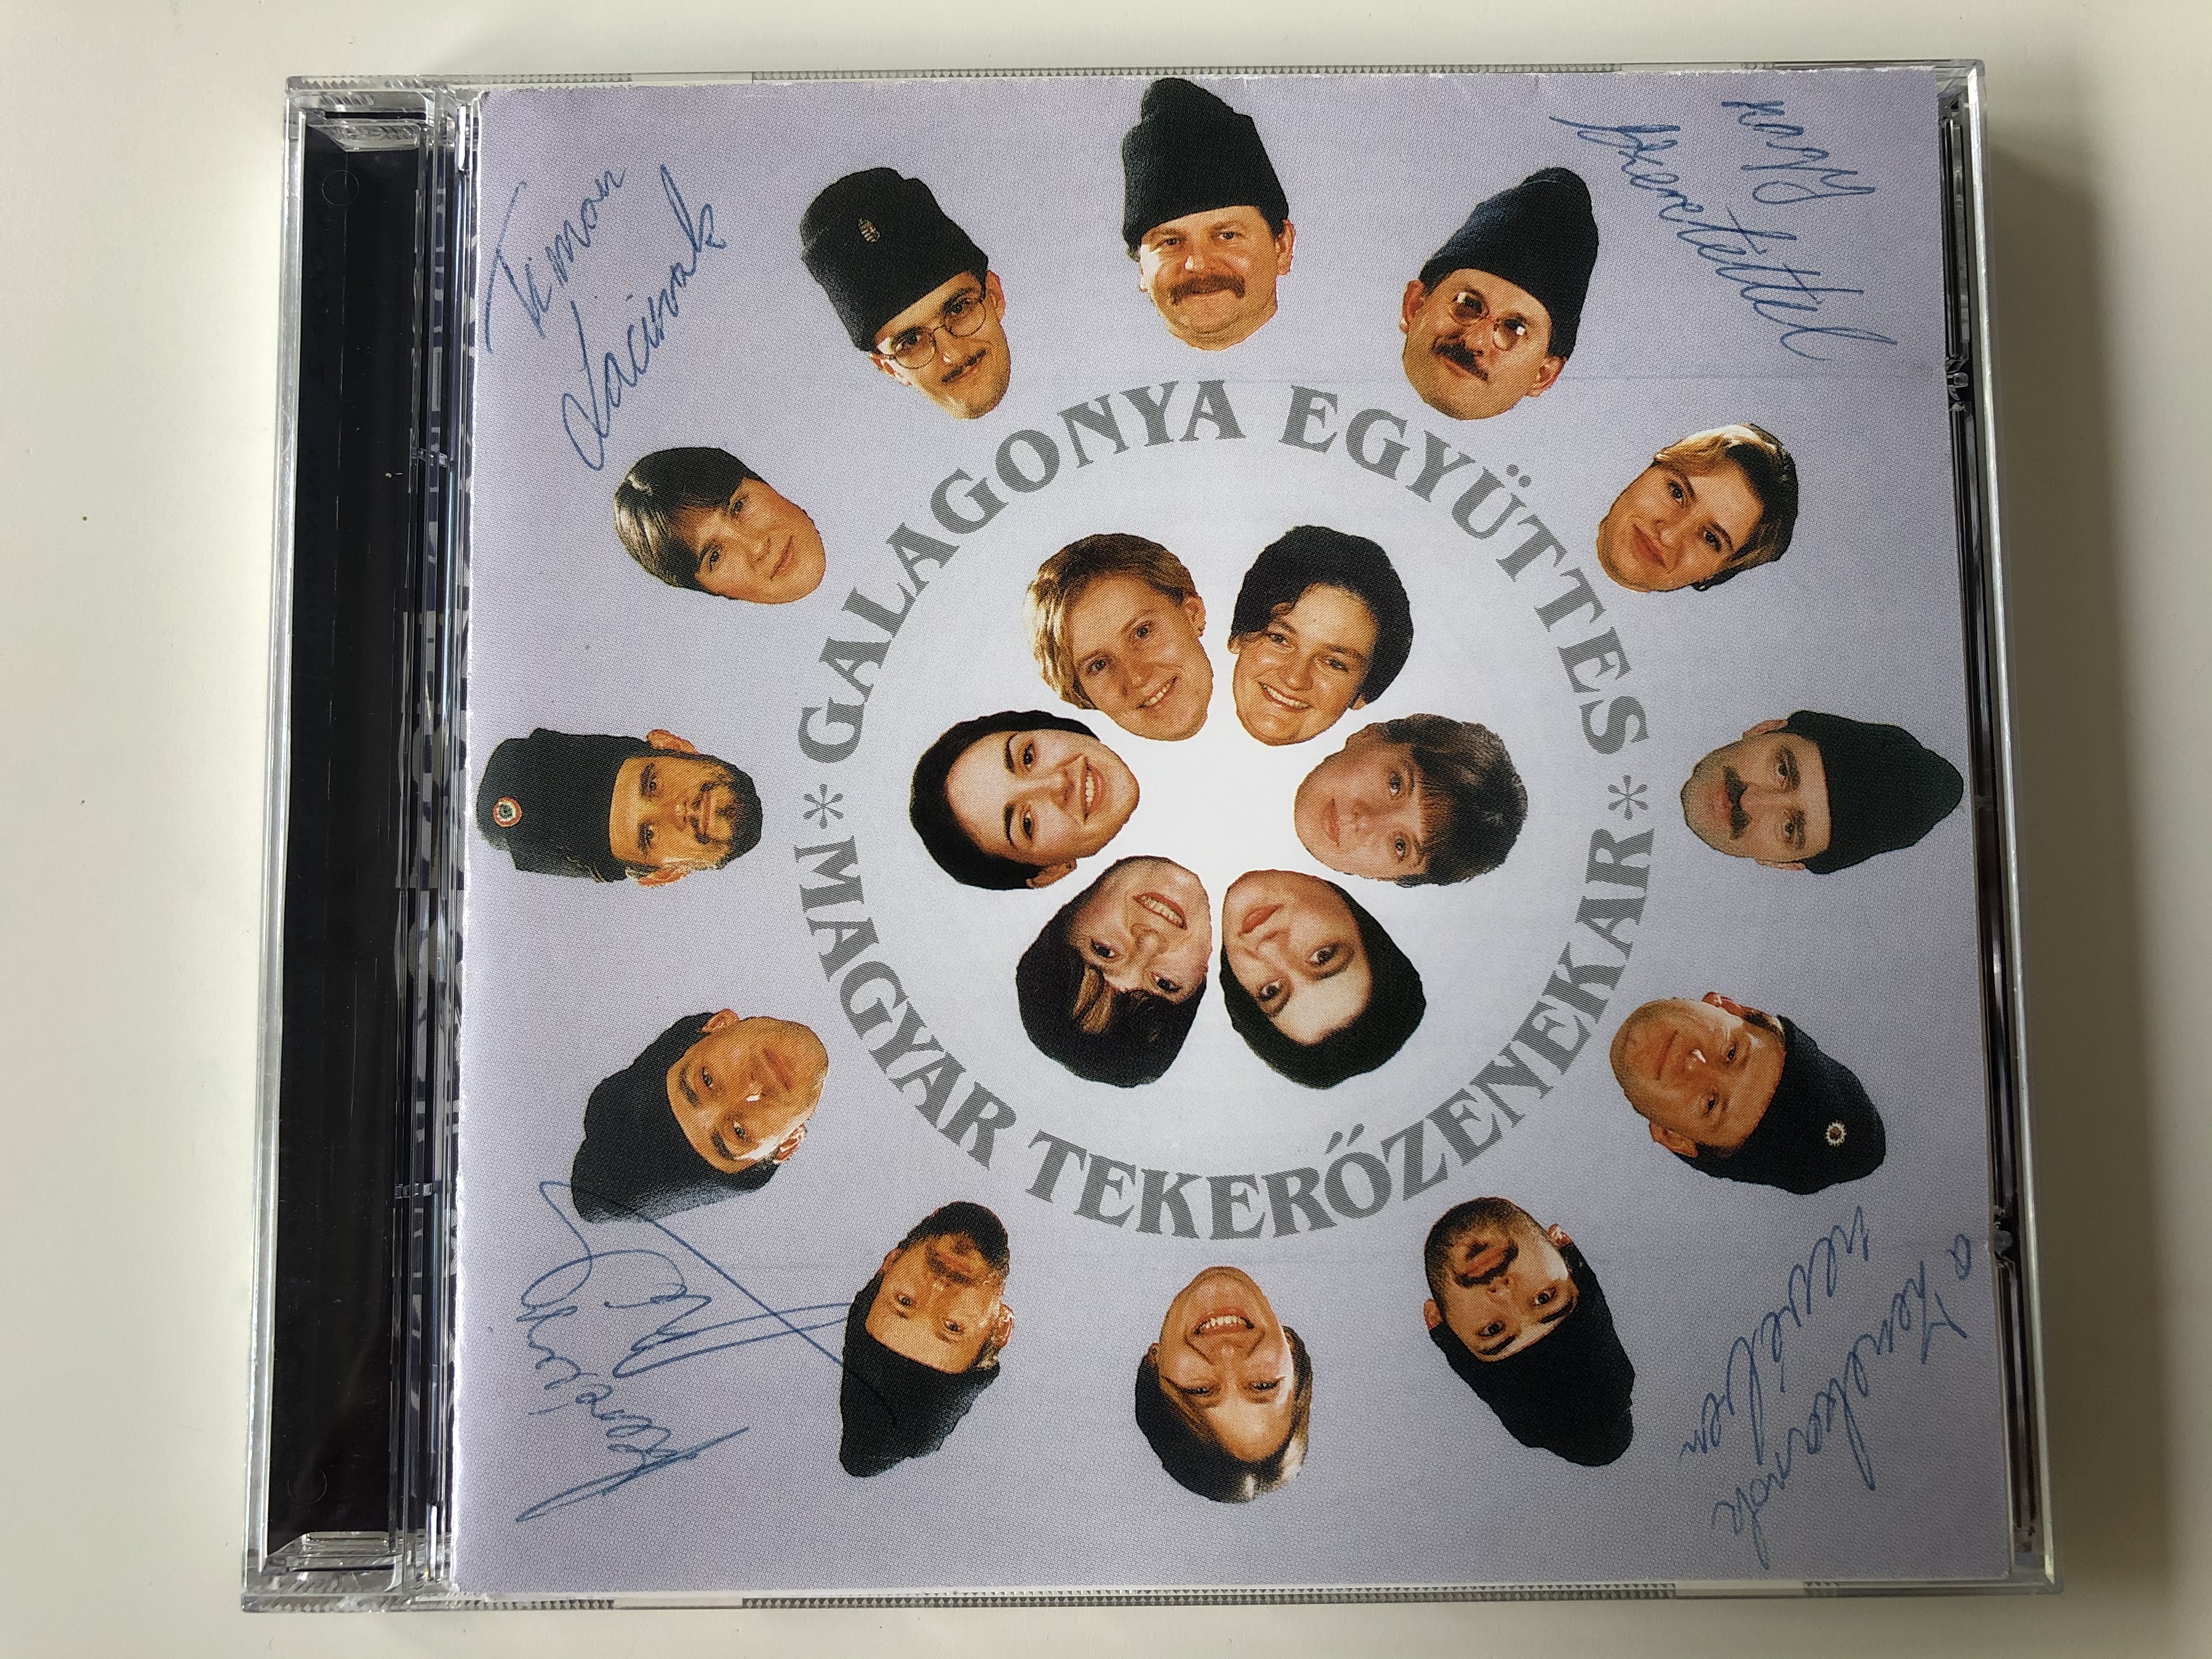 galagonya-egy-ttes-magyar-teker-zenekar-fon-records-audio-cd-1996-fa-009-2-1-.jpg